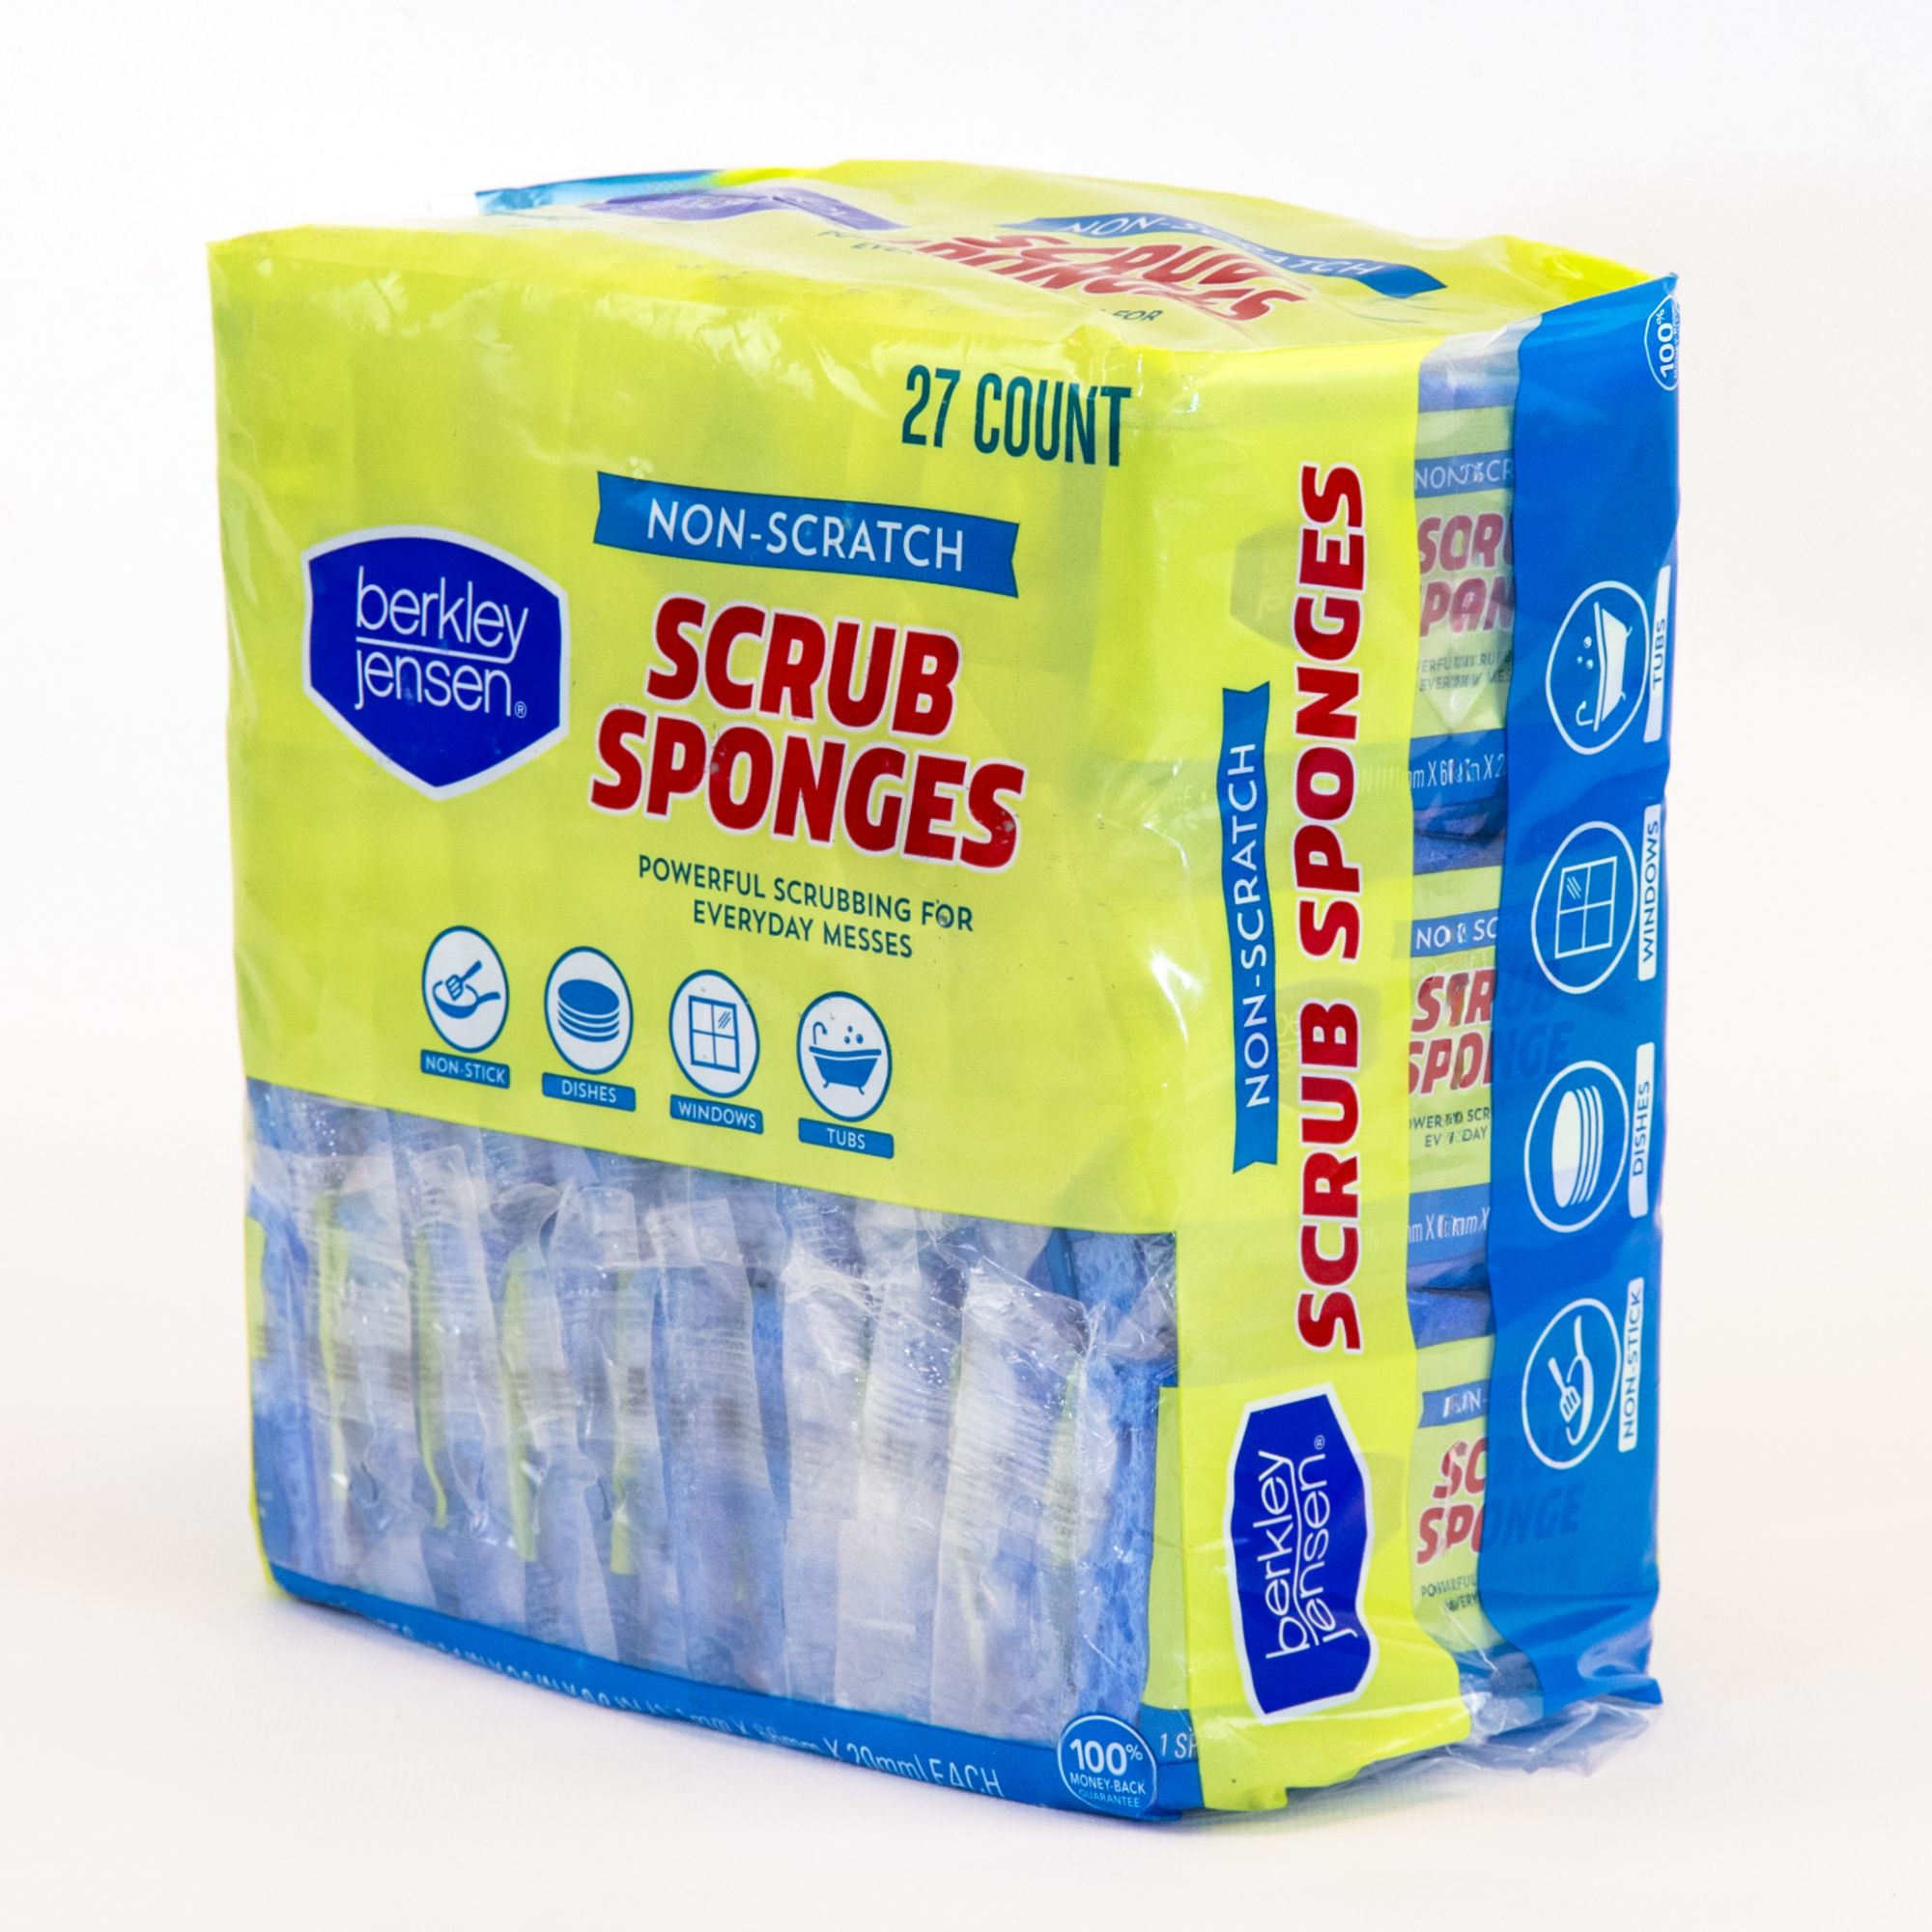 Berkley Jensen Non Scratch Cellulose Scrub Sponges, 27 ct.